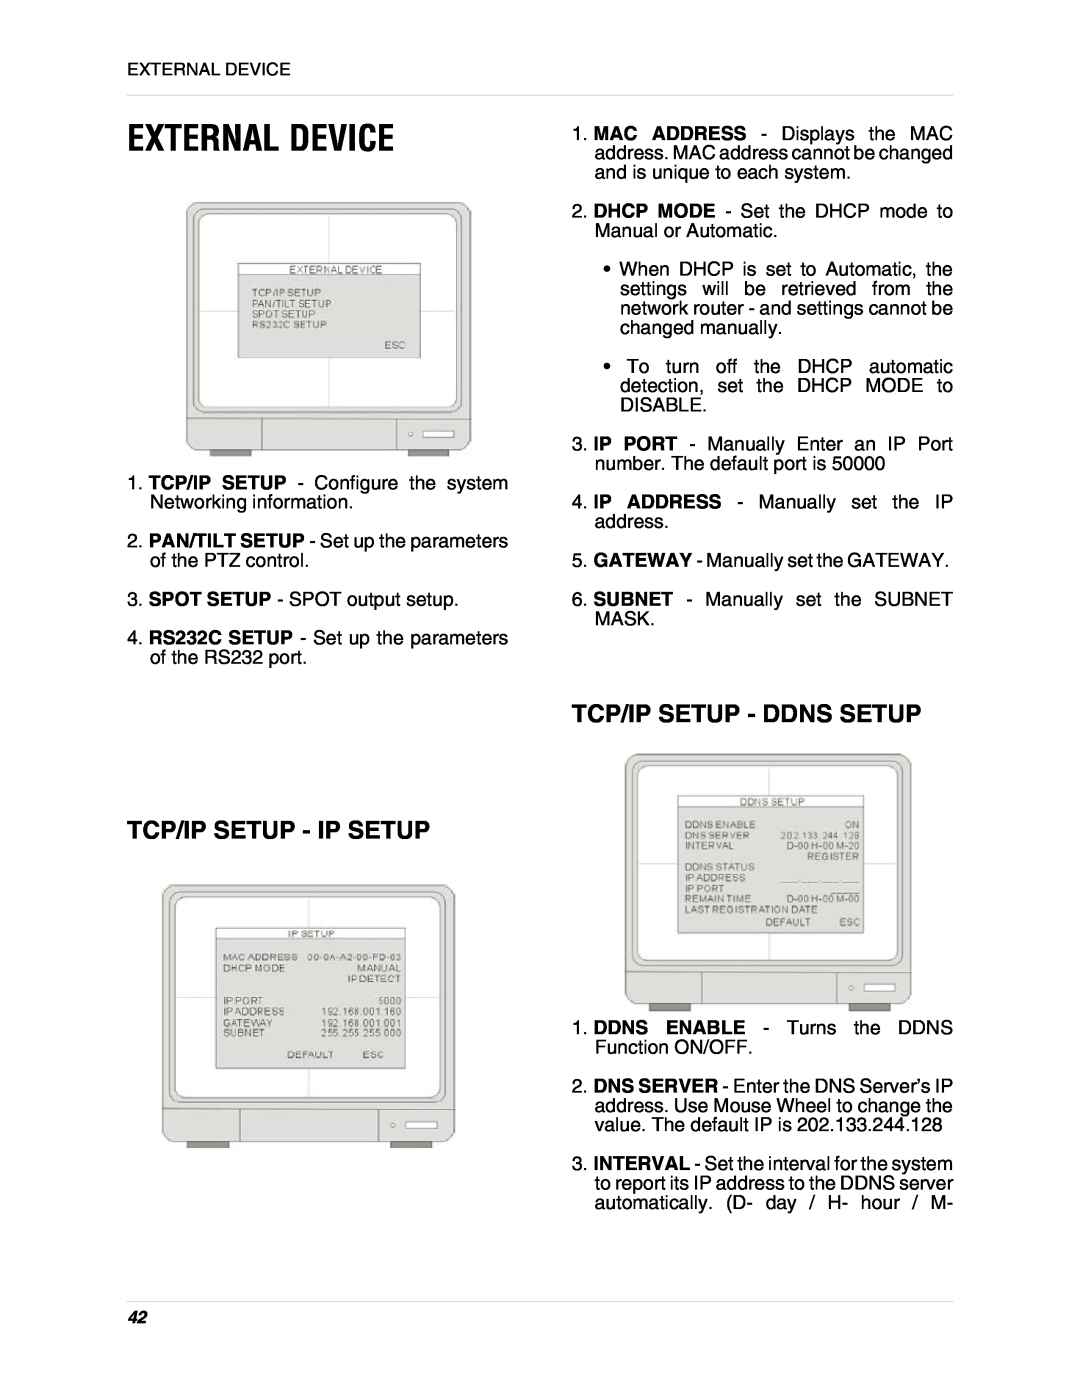 LOREX Technology L19lD1616501 instruction manual External Device, Tcp/Ip Setup - Ip Setup, Tcp/Ip Setup - Ddns Setup 